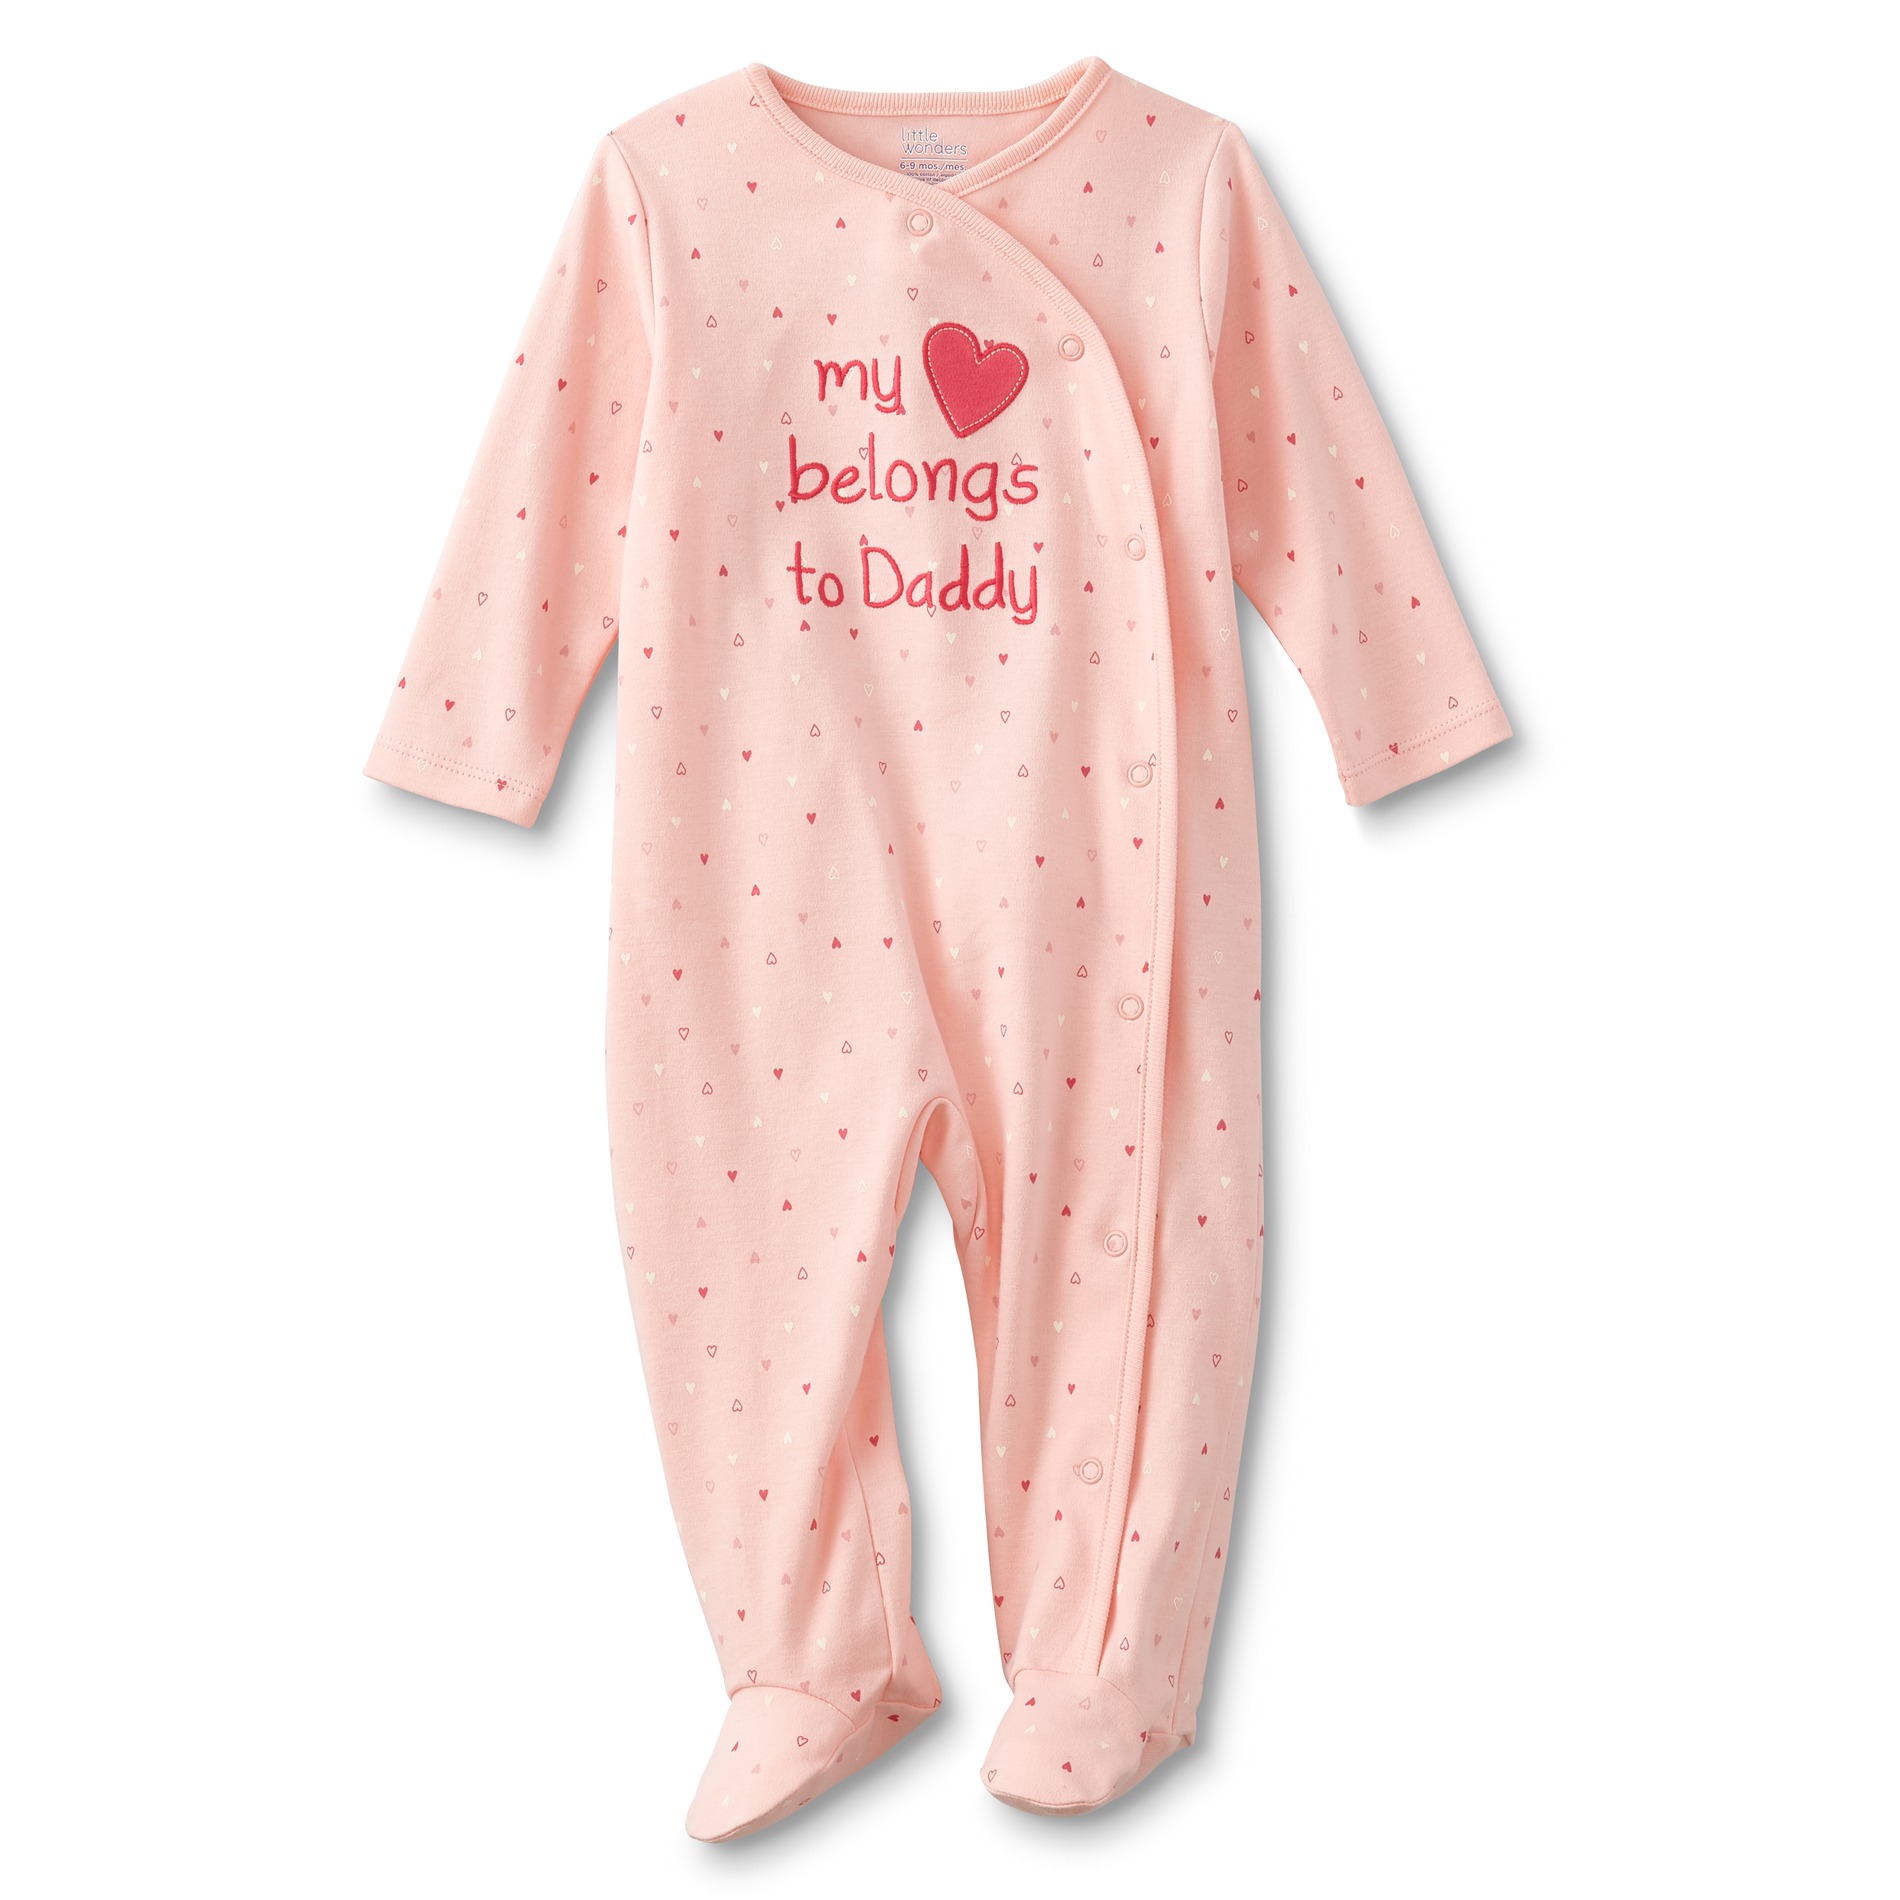 Little Wonders Newobrn Girls' Sleeper Pajamas - My Heart Belongs to Daddy